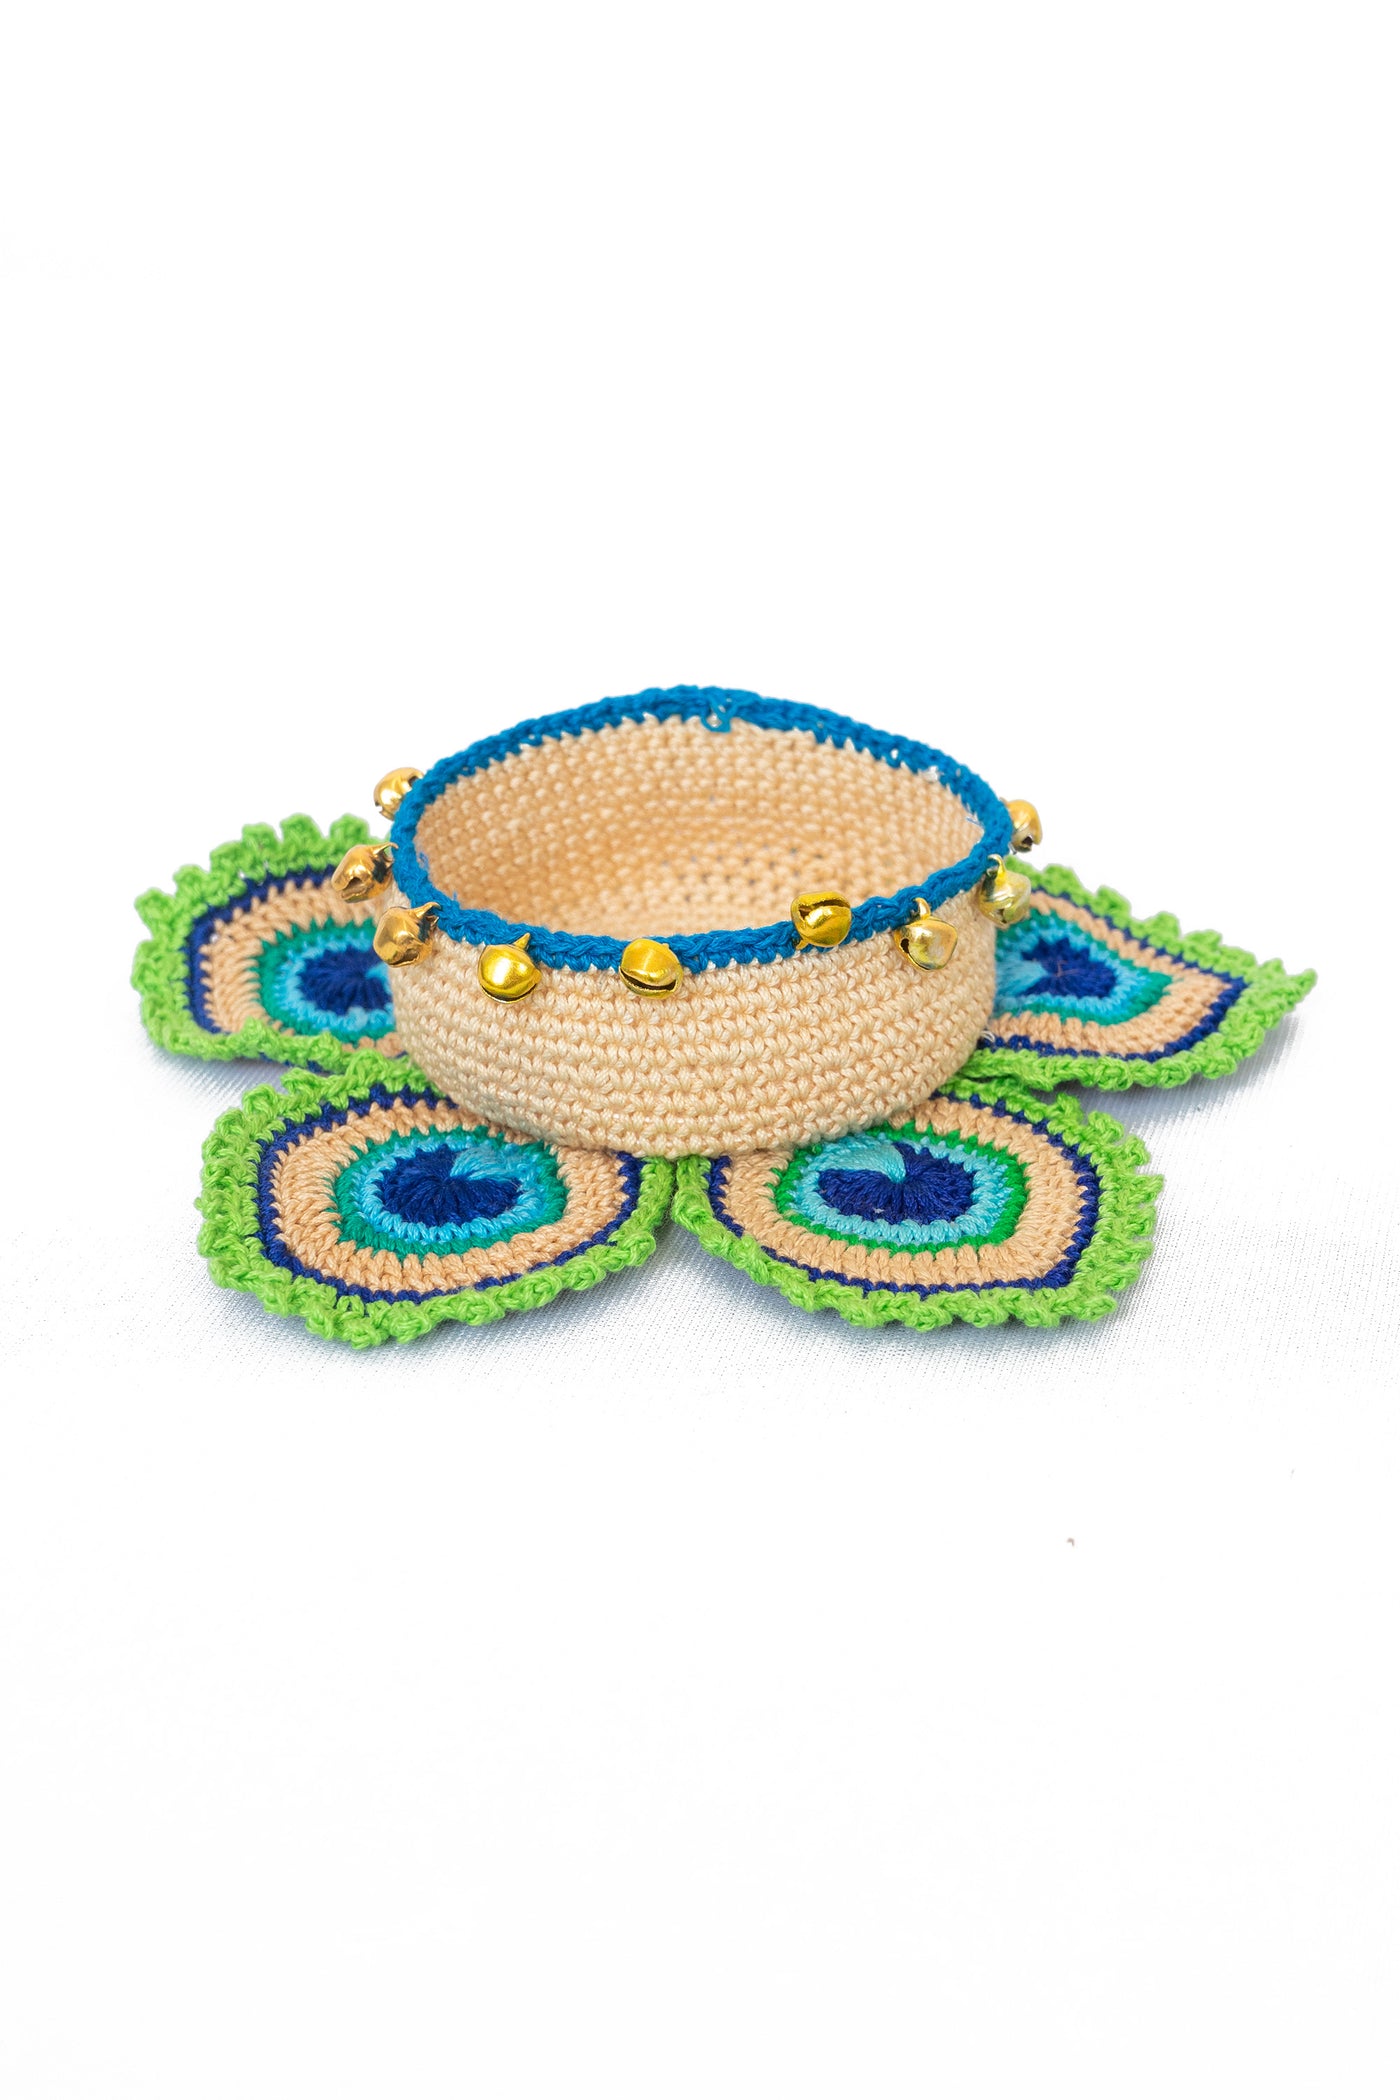 Handcrafted Peacock Crochet Tealight